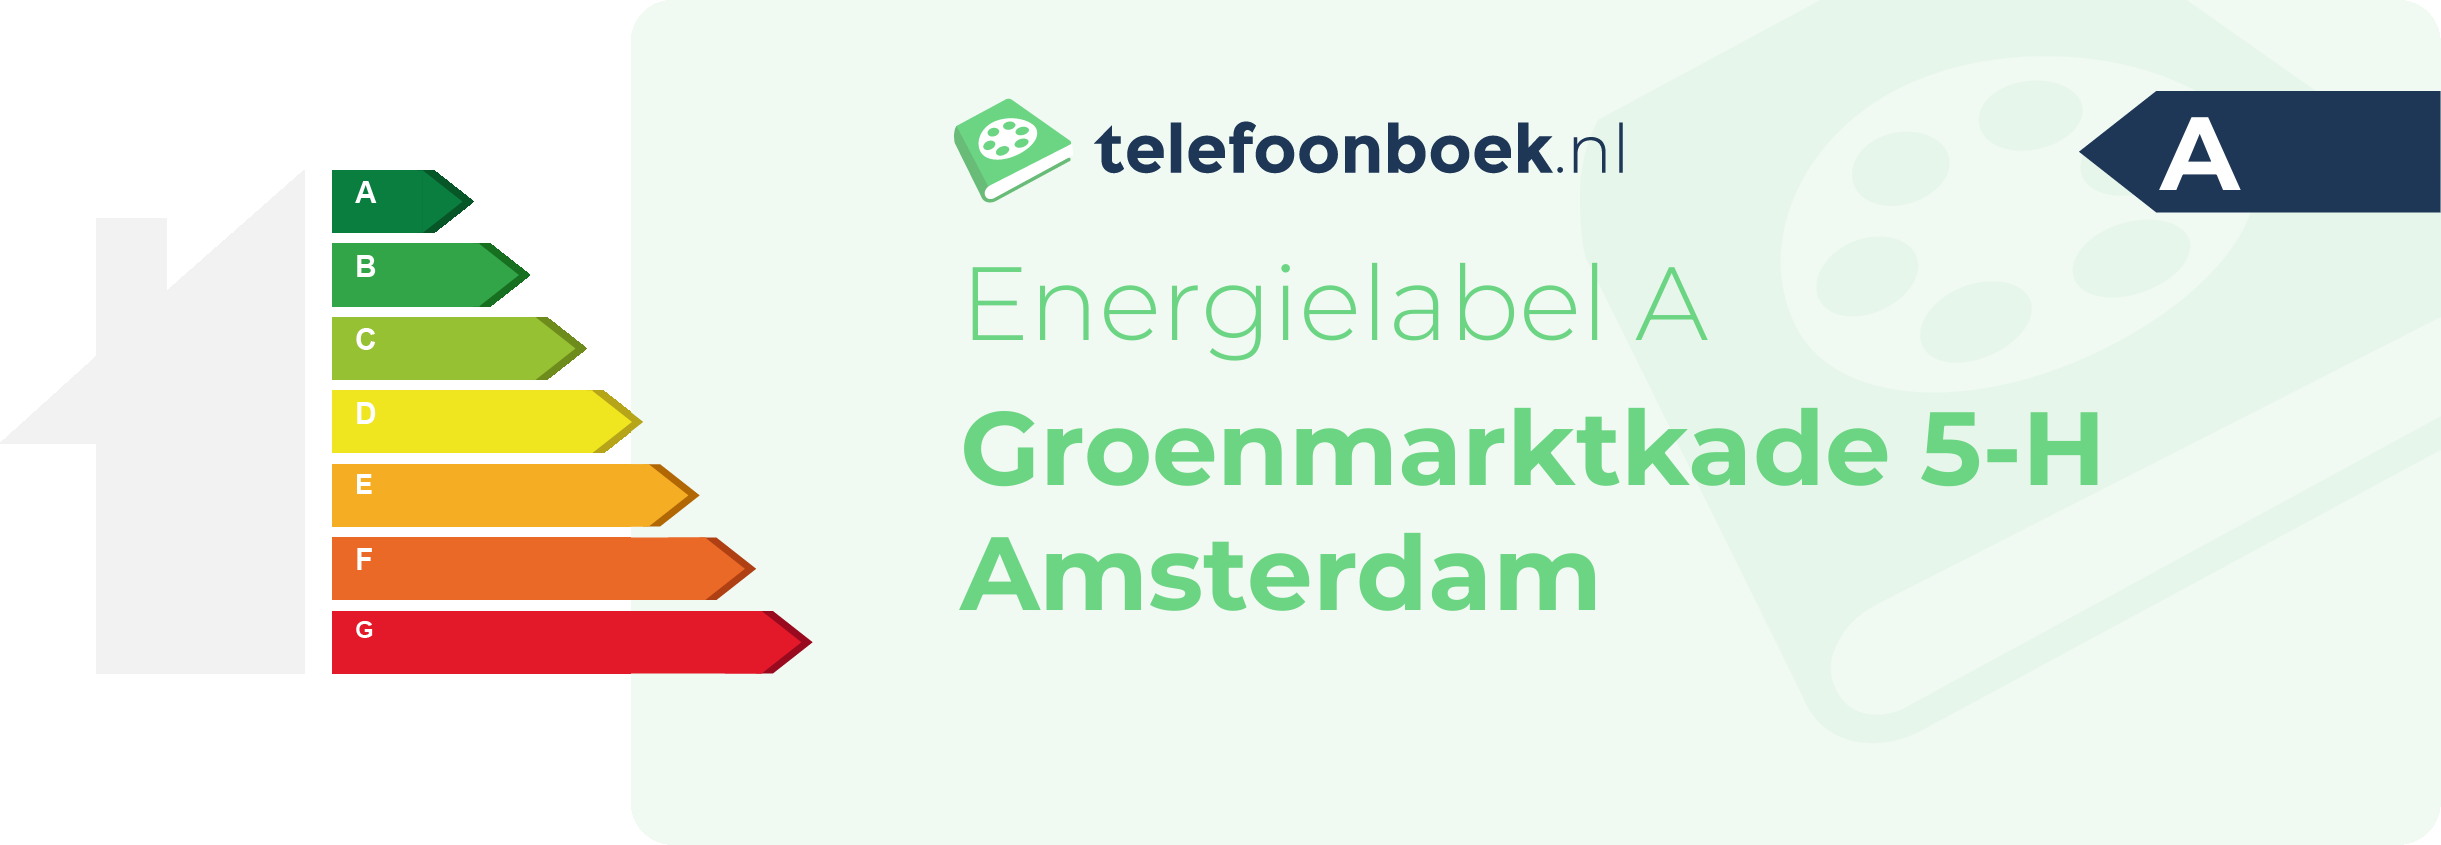 Energielabel Groenmarktkade 5-H Amsterdam